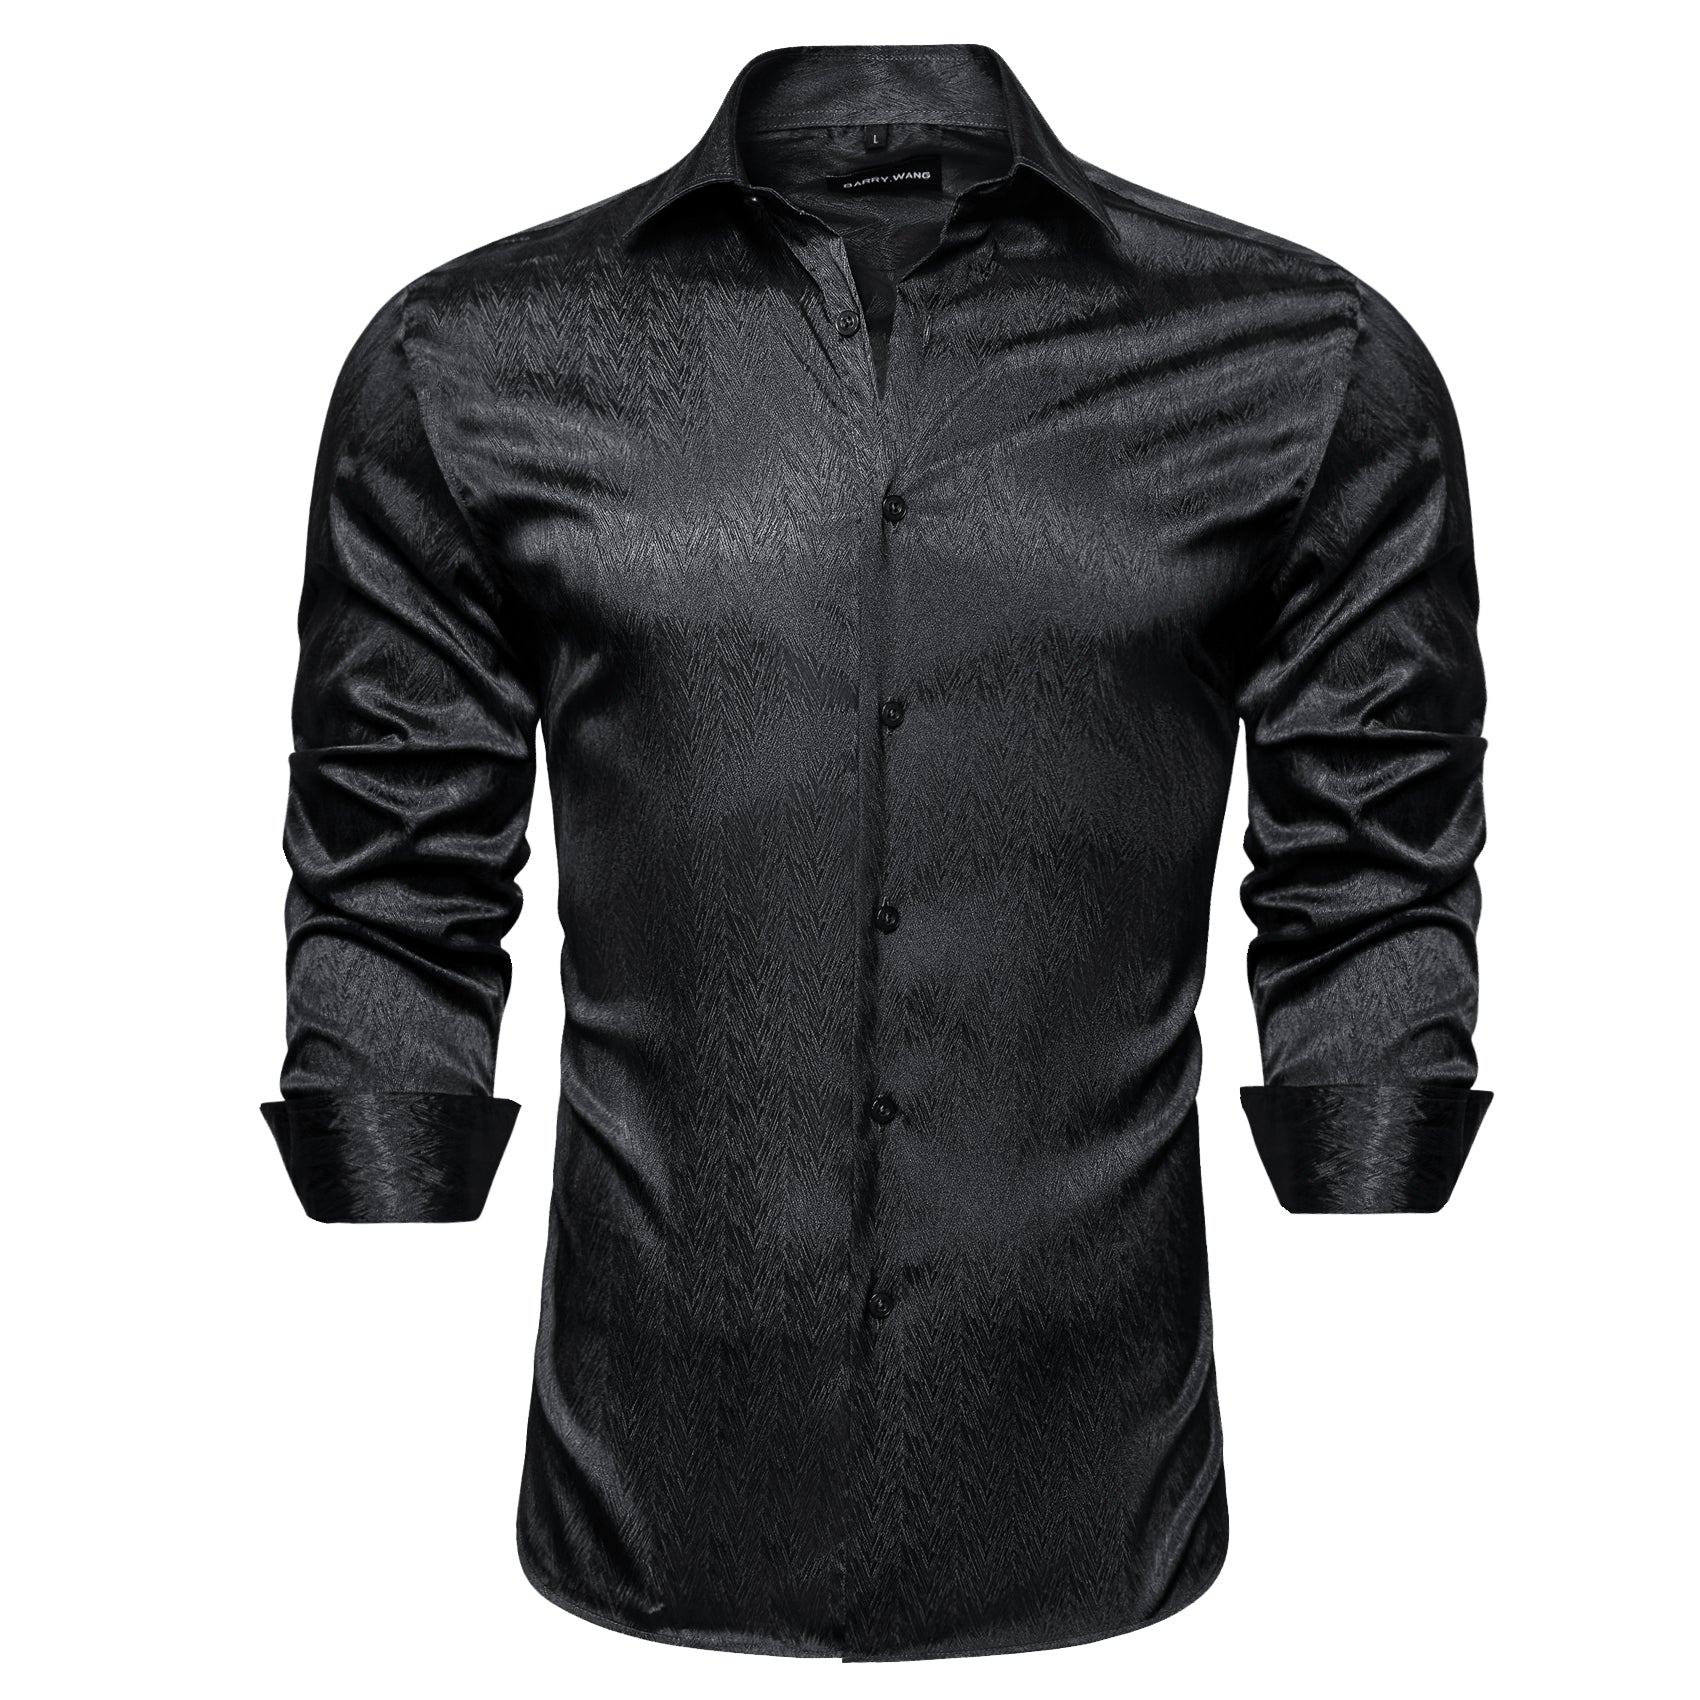 Barry.wang Button Down Shirt Classy Silk Black Solid Long Sleeve Shirt